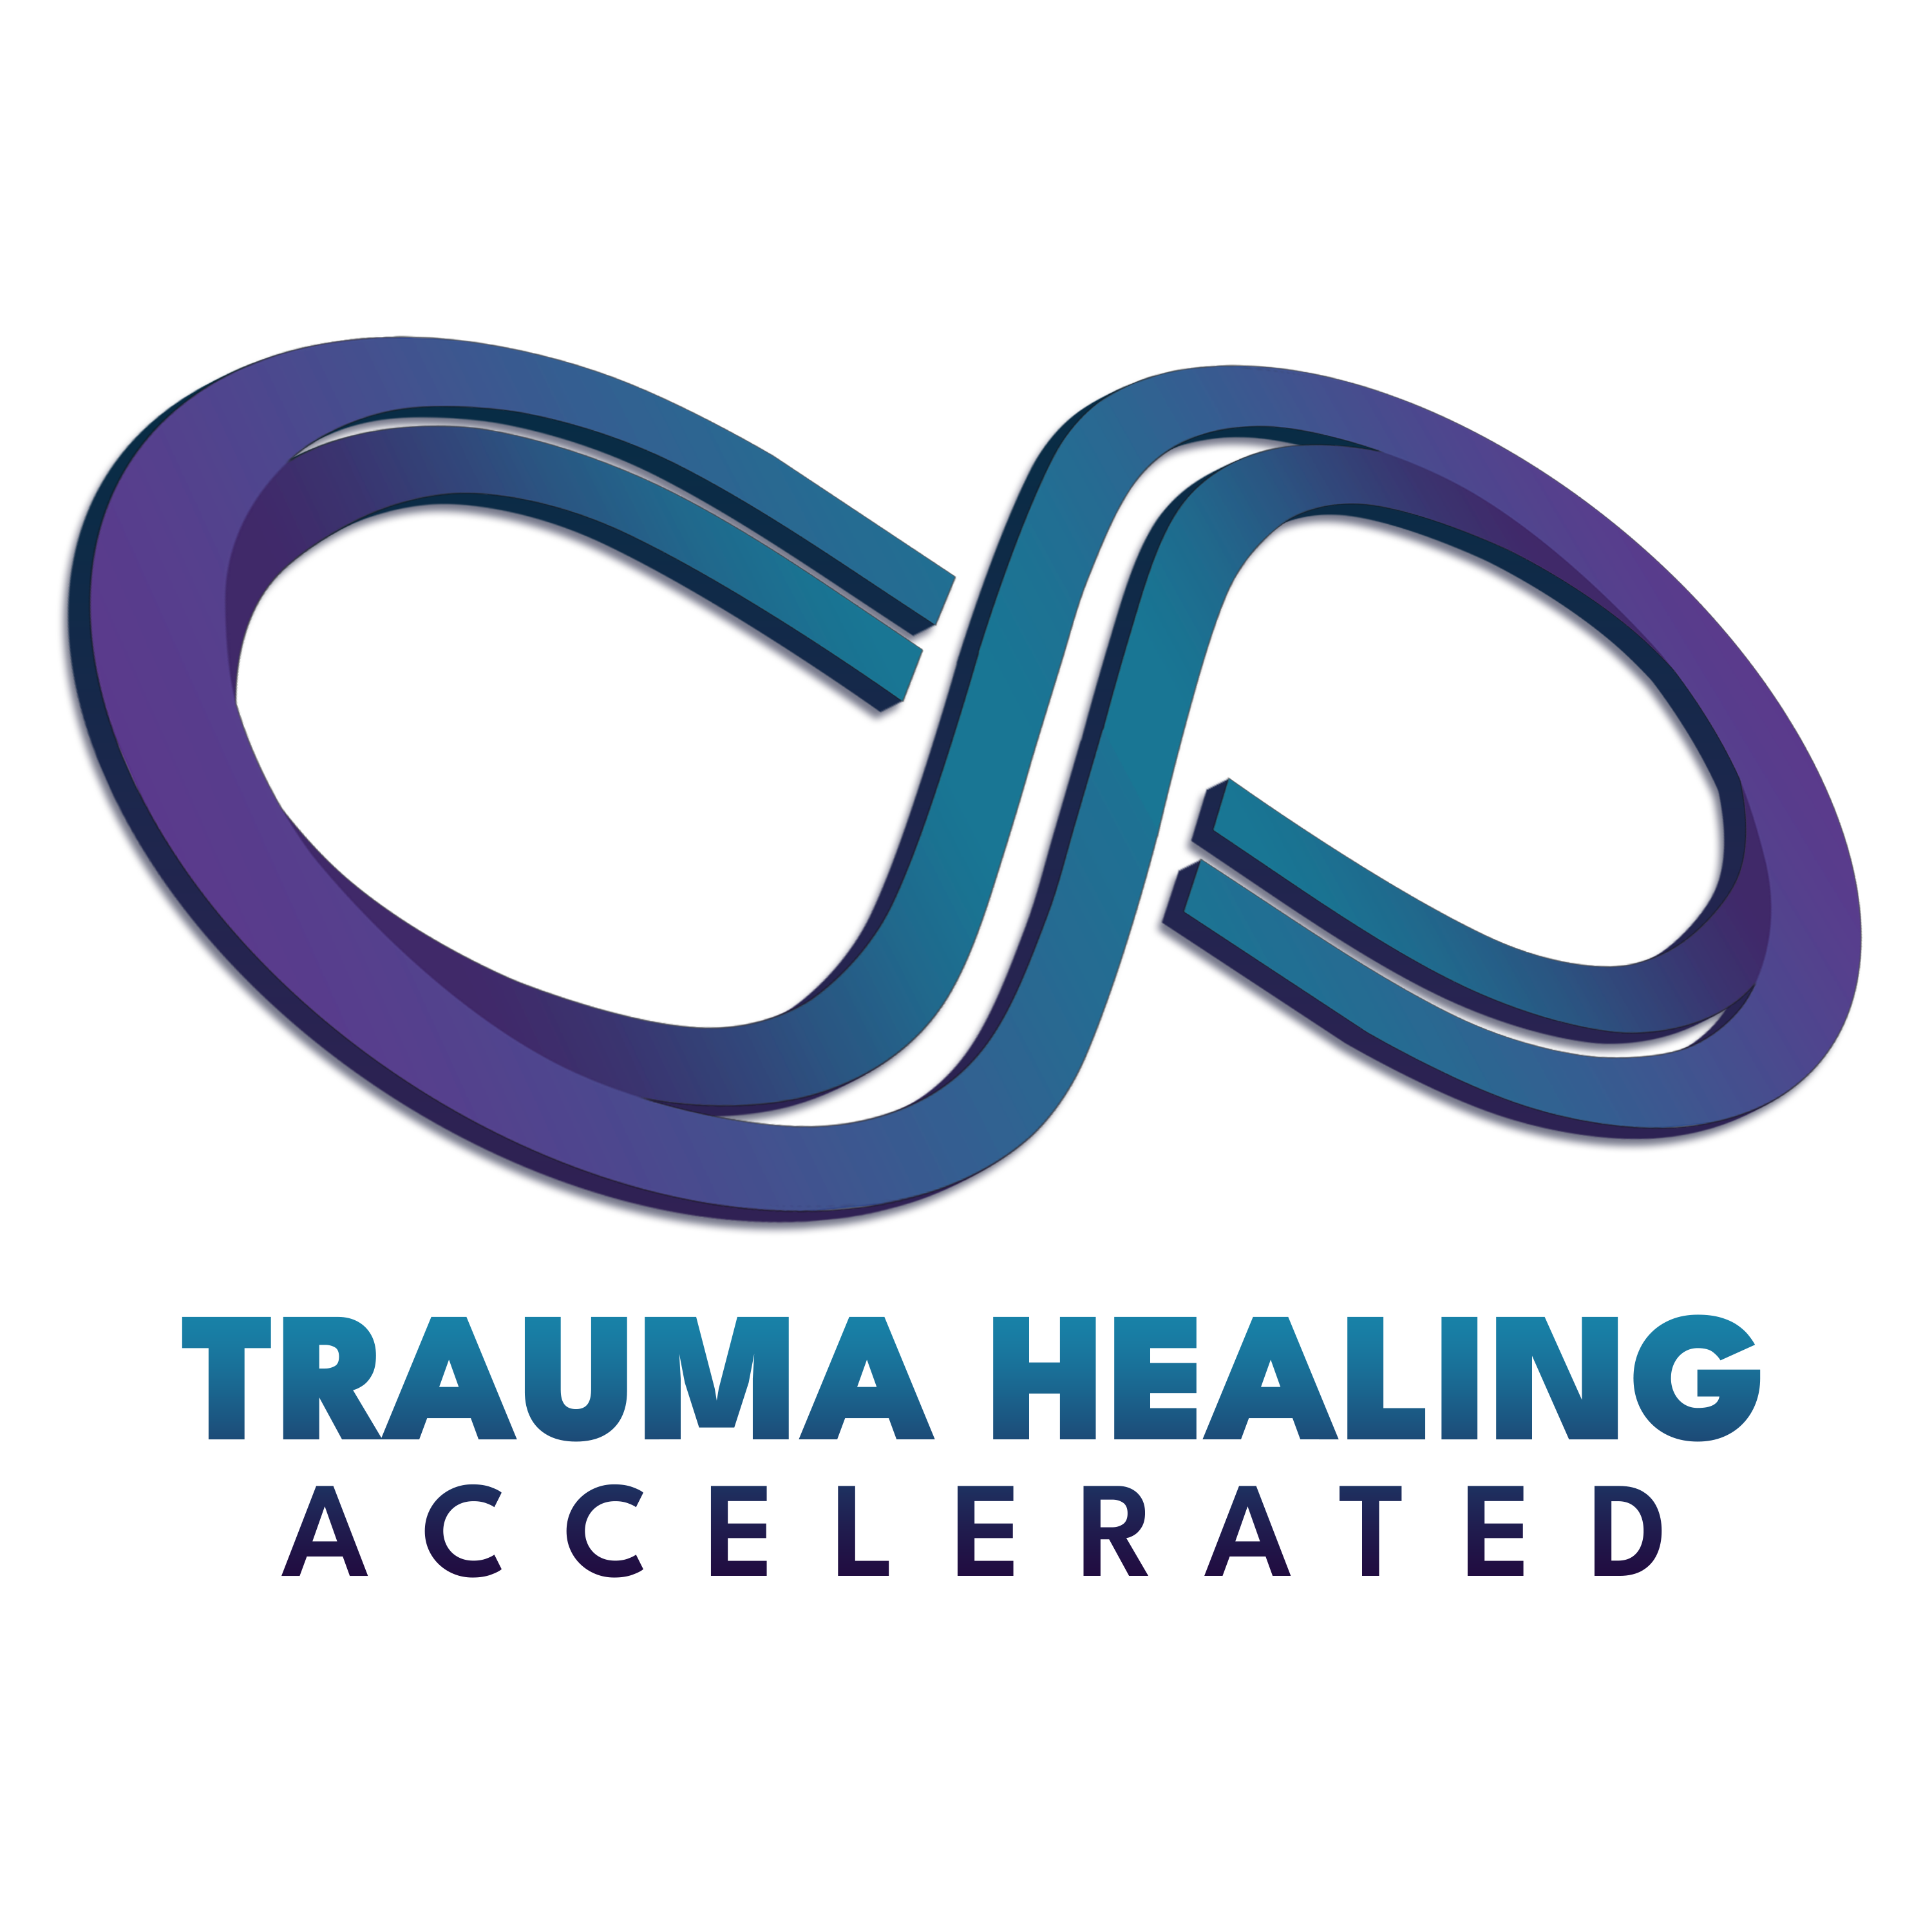 trauma healing accelerated logo